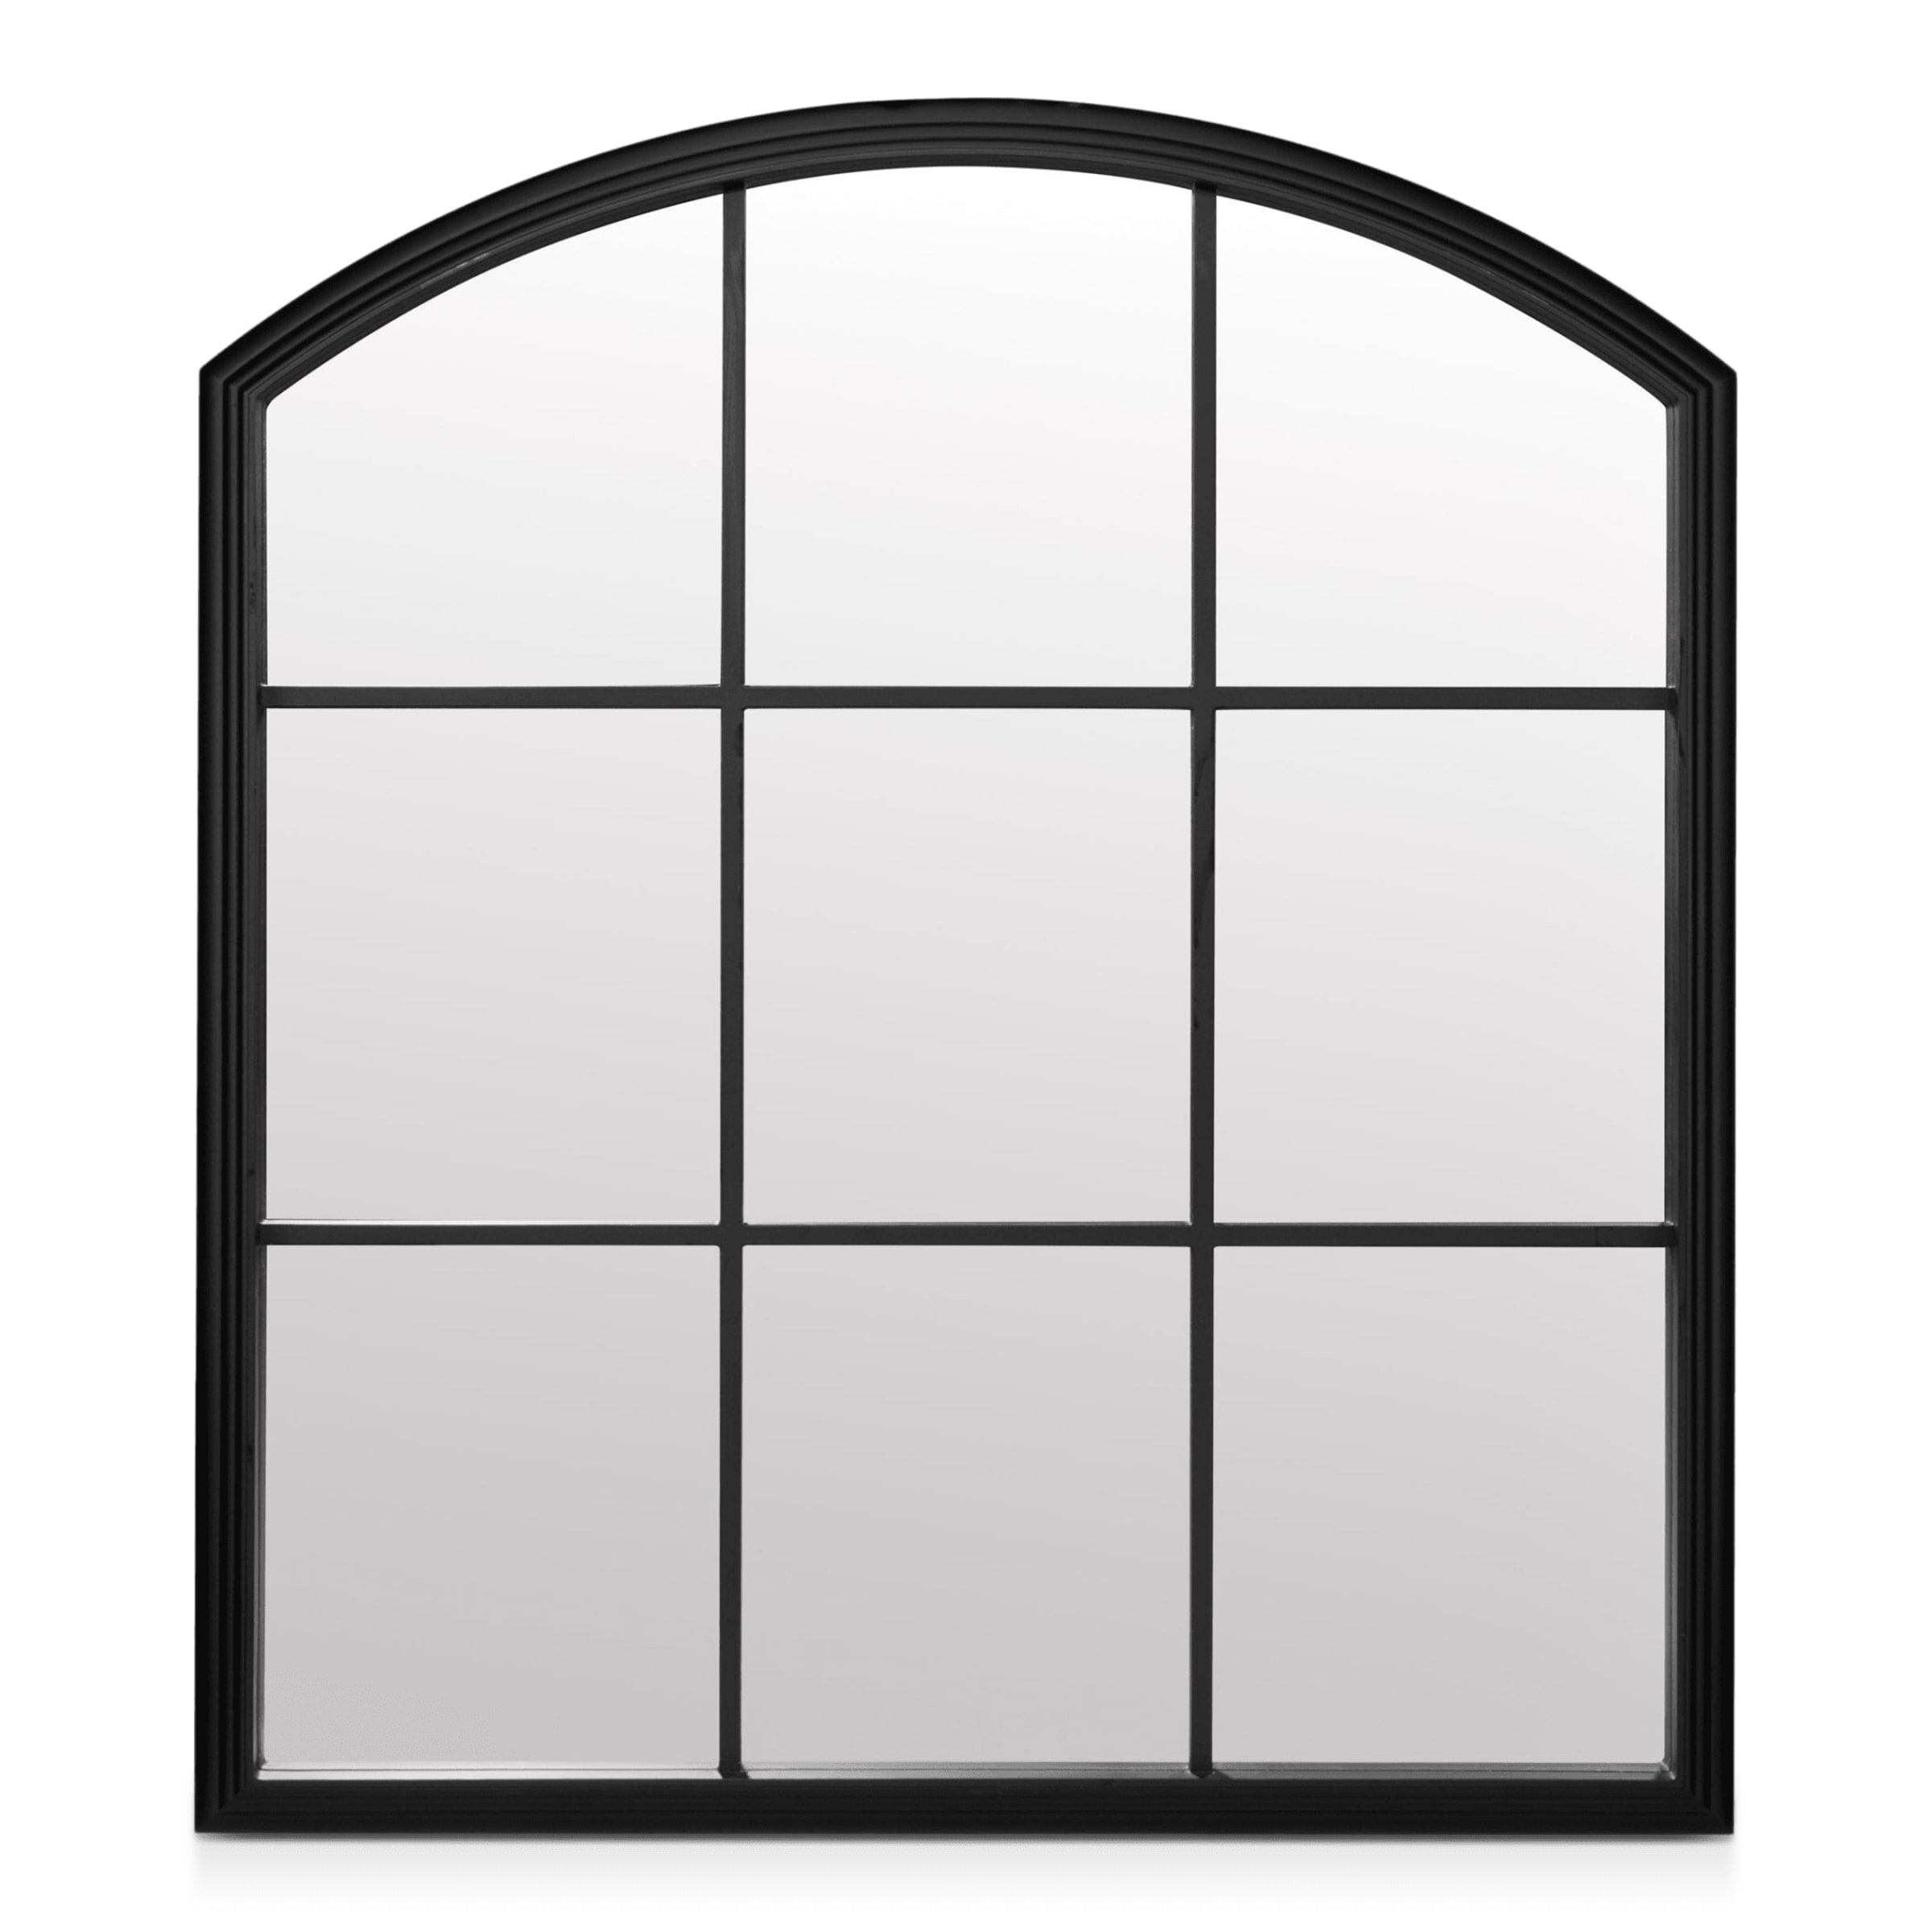 Arched Window Mirror Bouclair Com, Arched Window Mirror Black